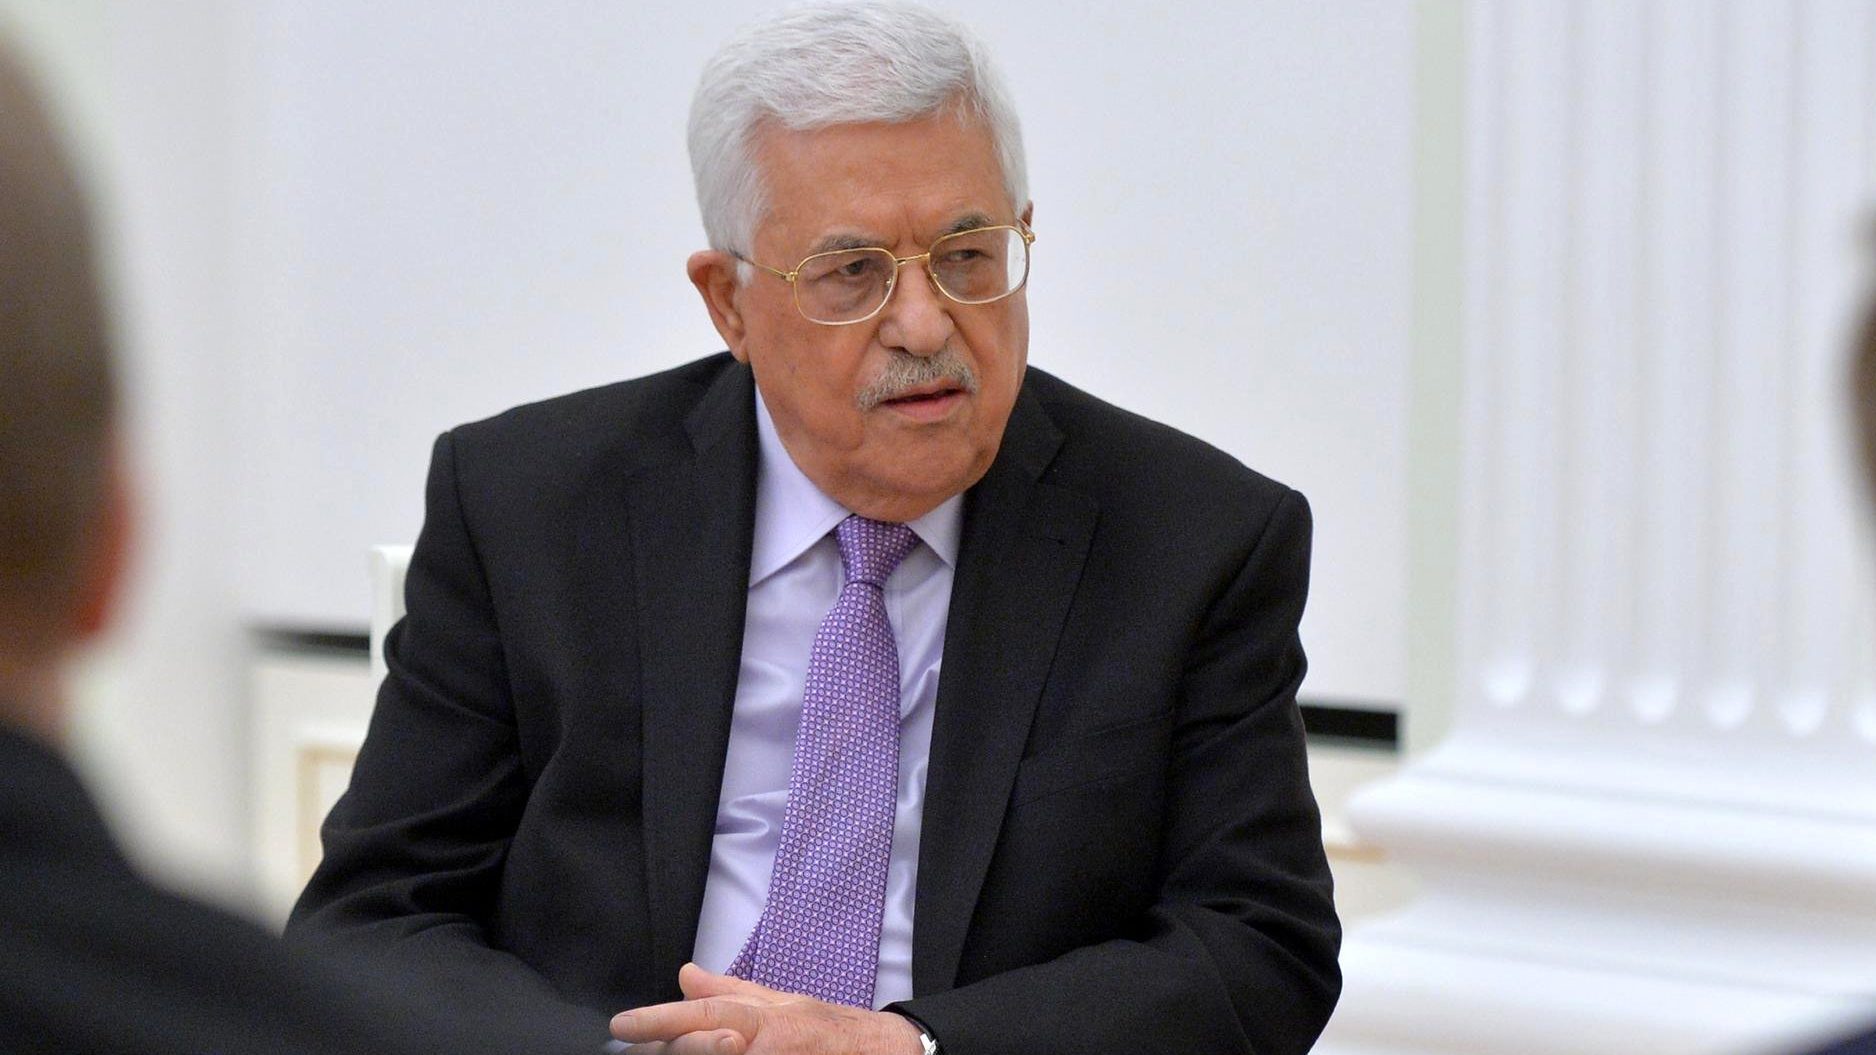 Calls by President Biden, PM Netanyahu To Marginalize Abbas, ‘Revitalize’ PA Infuriate Palestinians